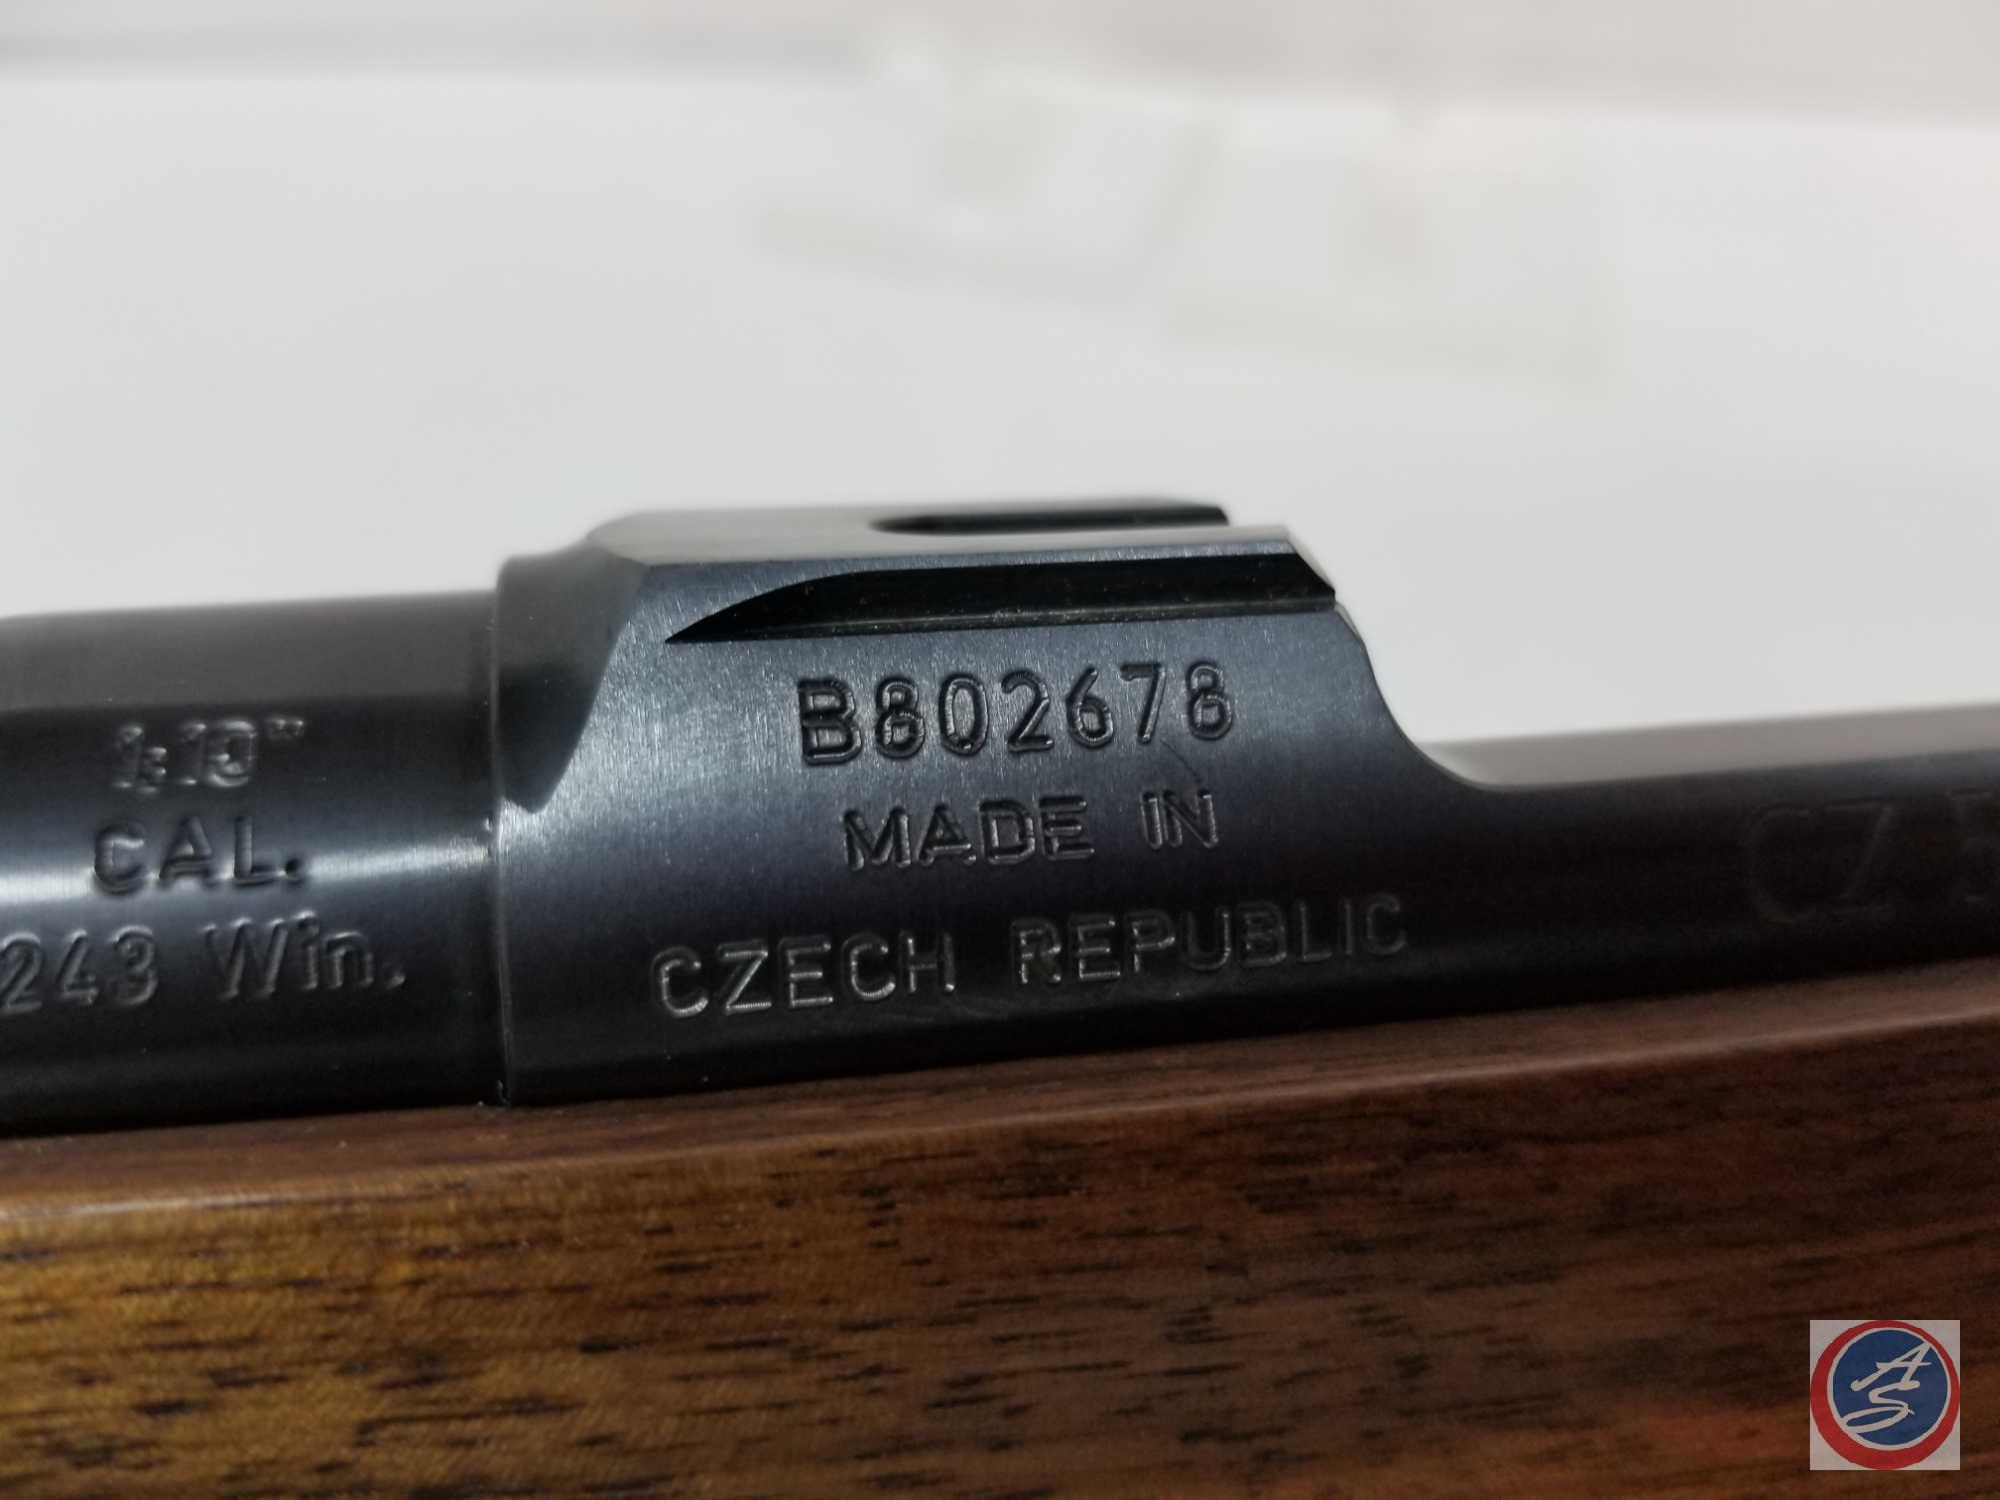 CZ Model CZ557 243 Rifle Bolt Action Rifle New in Box Ser # B802678